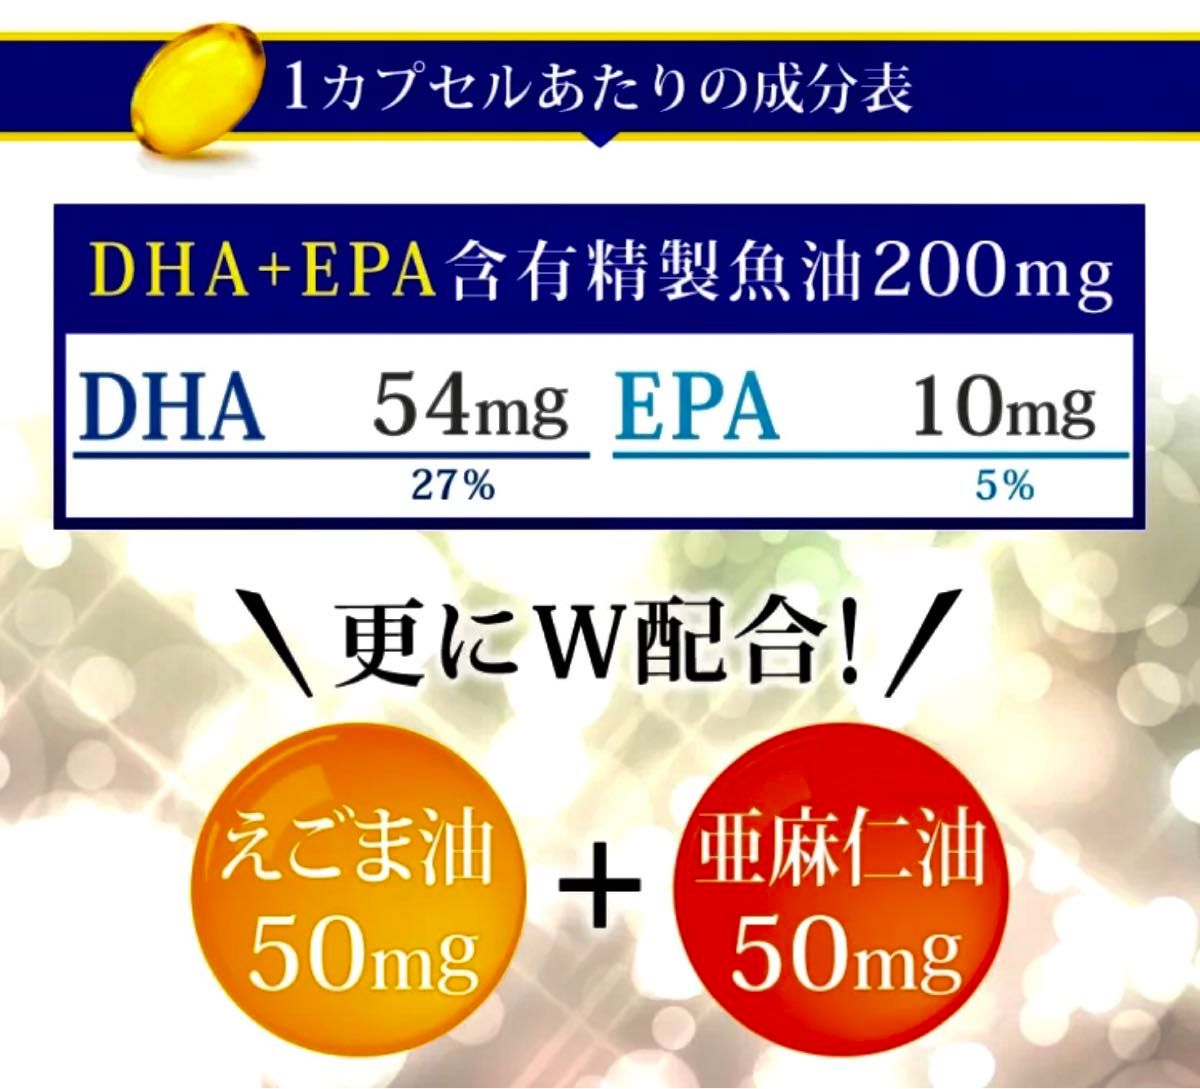 DHA+EPA ☆★ エゴマ油・亜麻仁油配合 ☆ 約３ヶ月分 ★☆